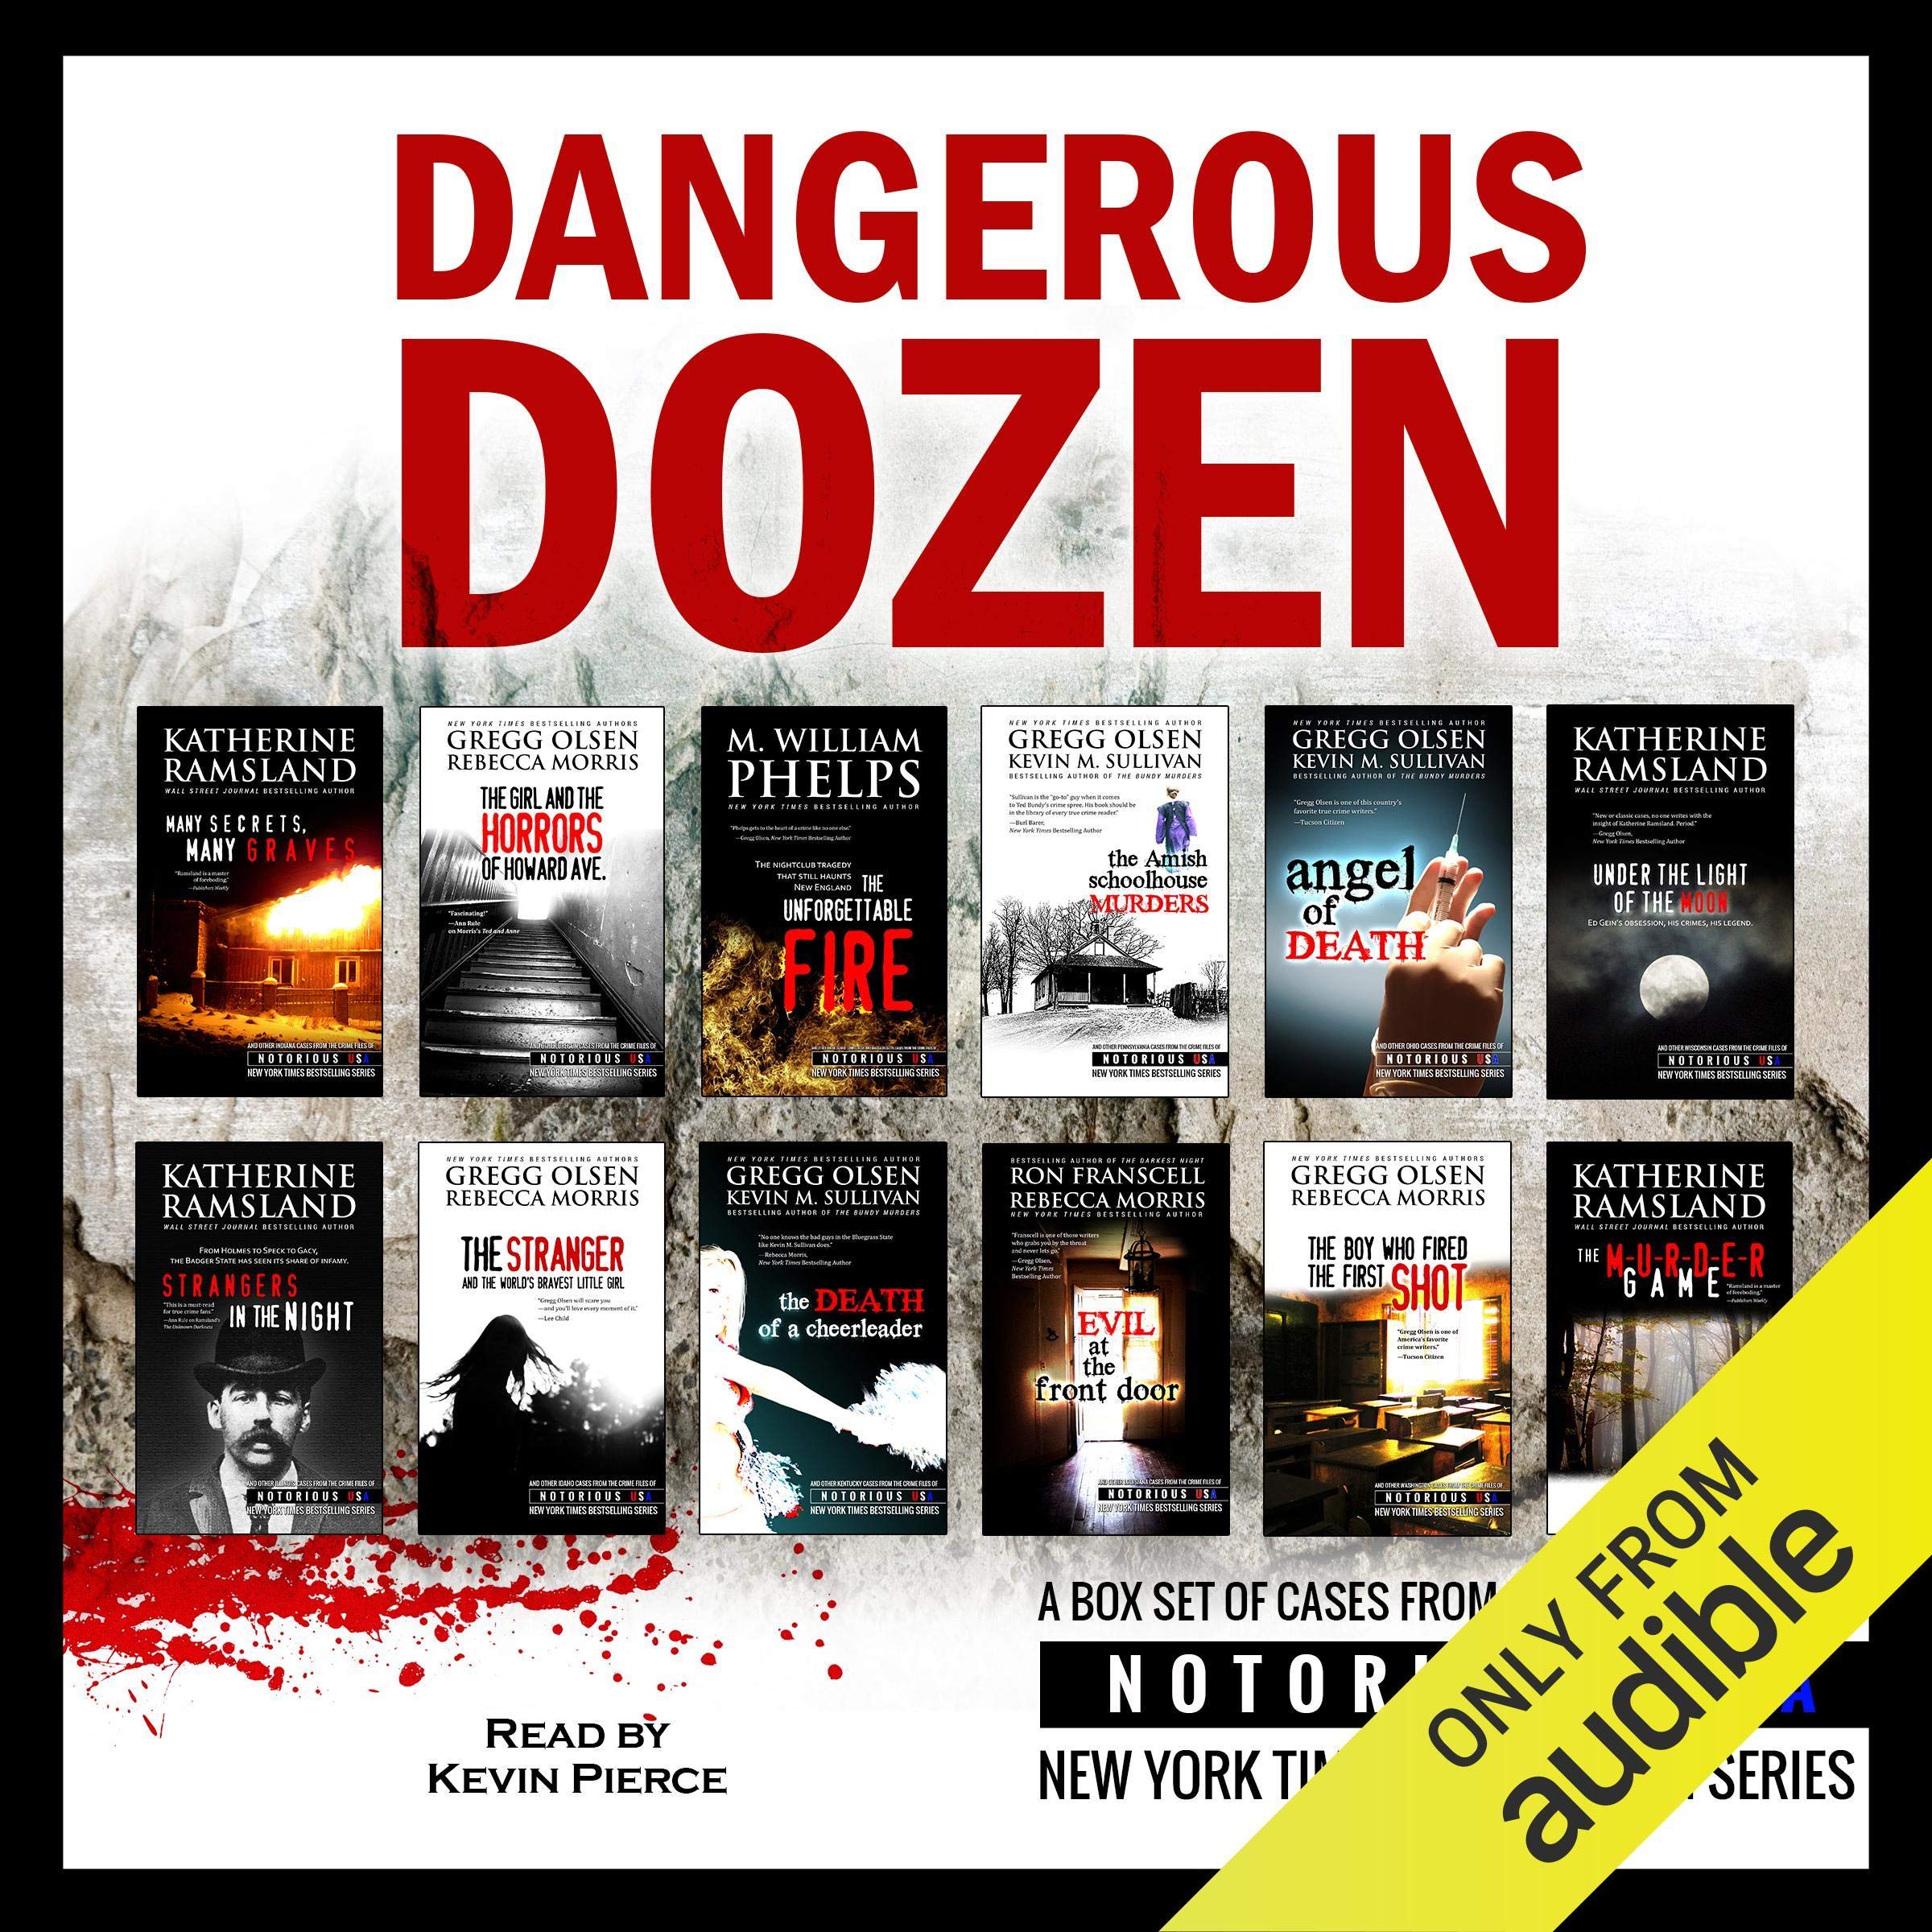 Dangerous Dozen: Notorious USA True Crime Box Set